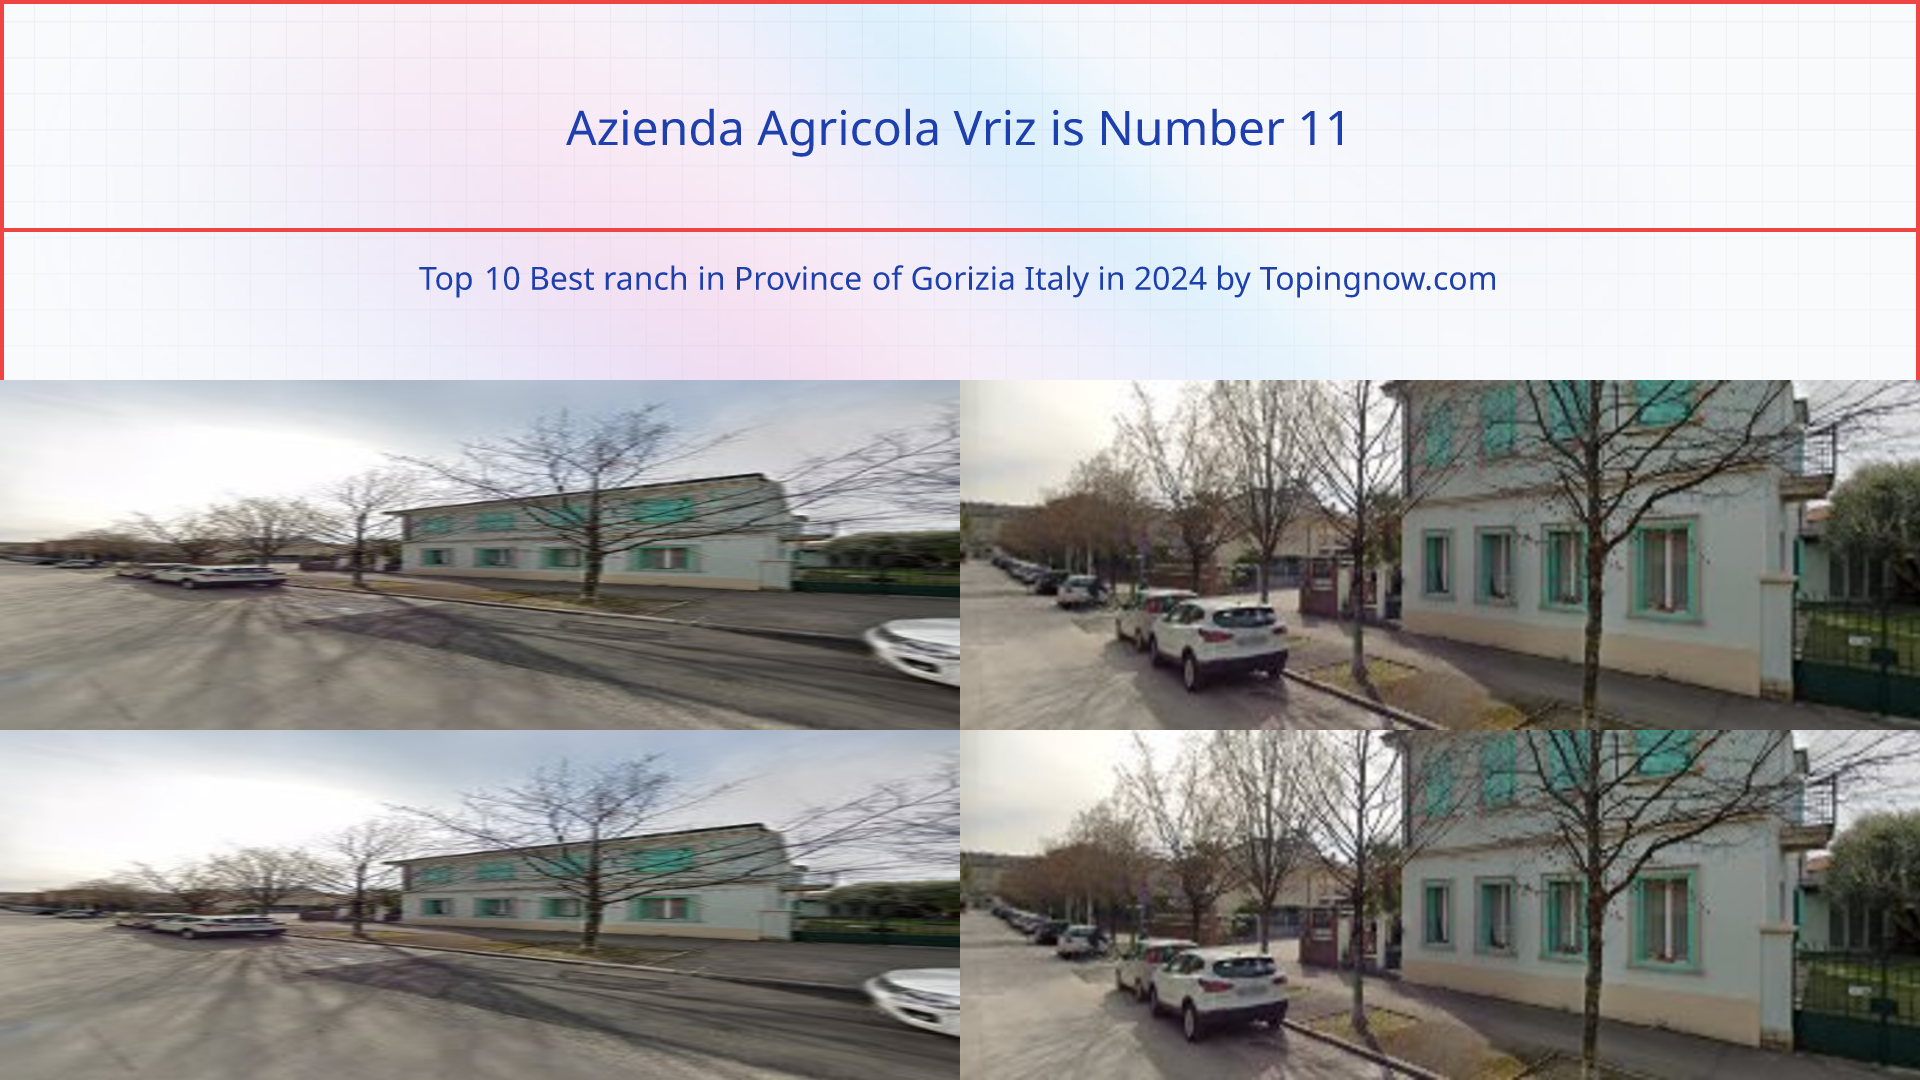 Azienda Agricola Vriz: Top 10 Best ranch in Province of Gorizia Italy in 2024